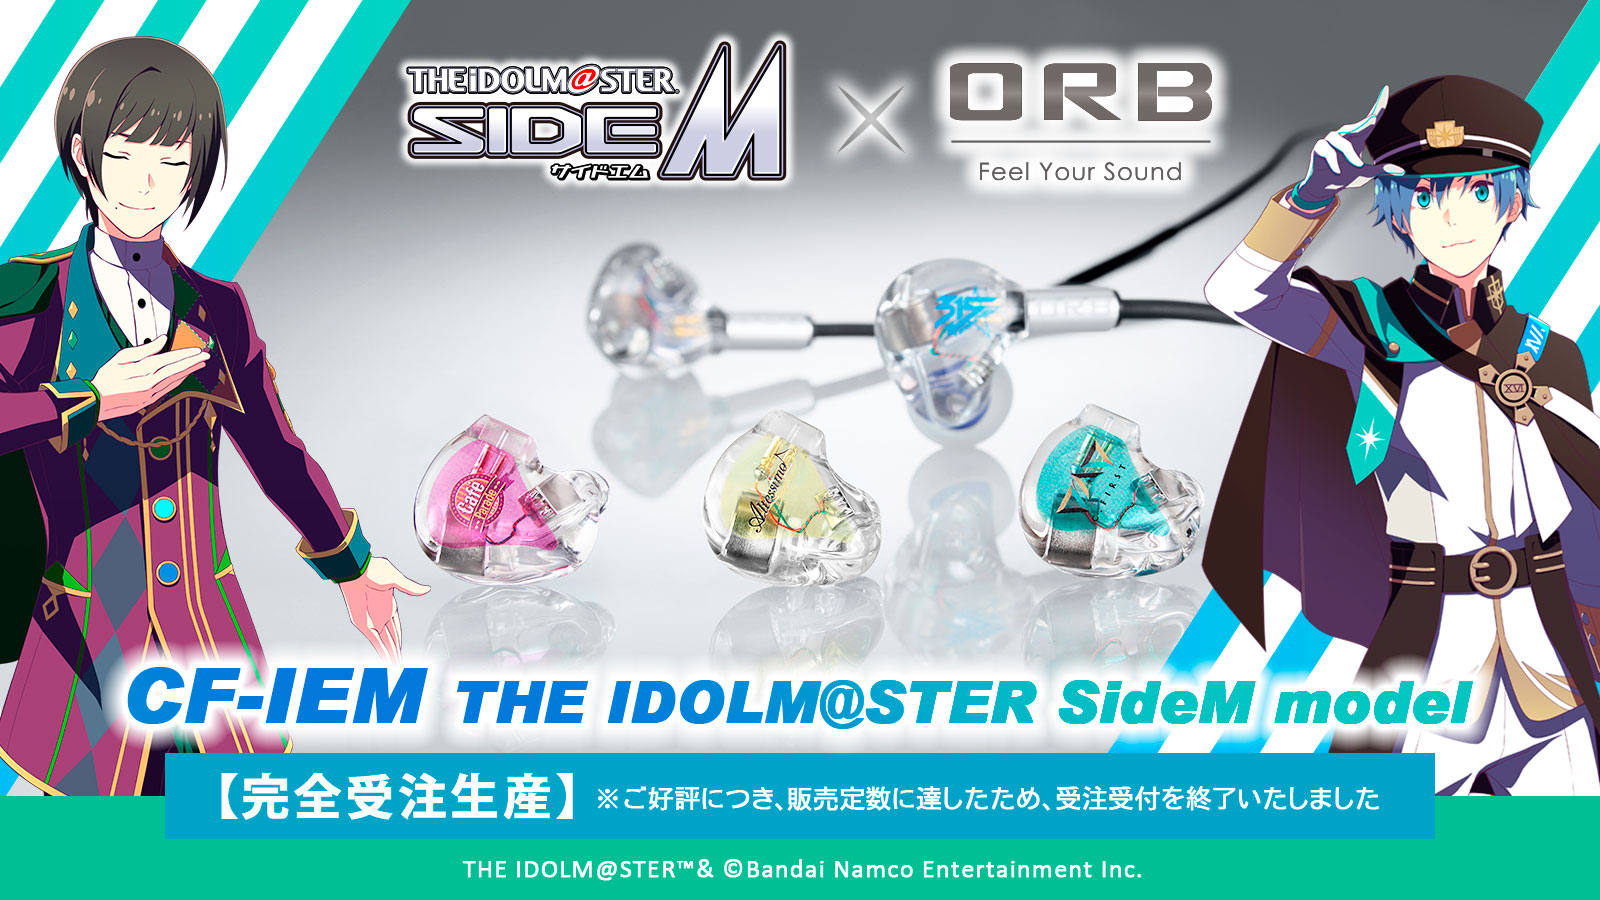 CF-IEM THE IDOLM@STER SideM model